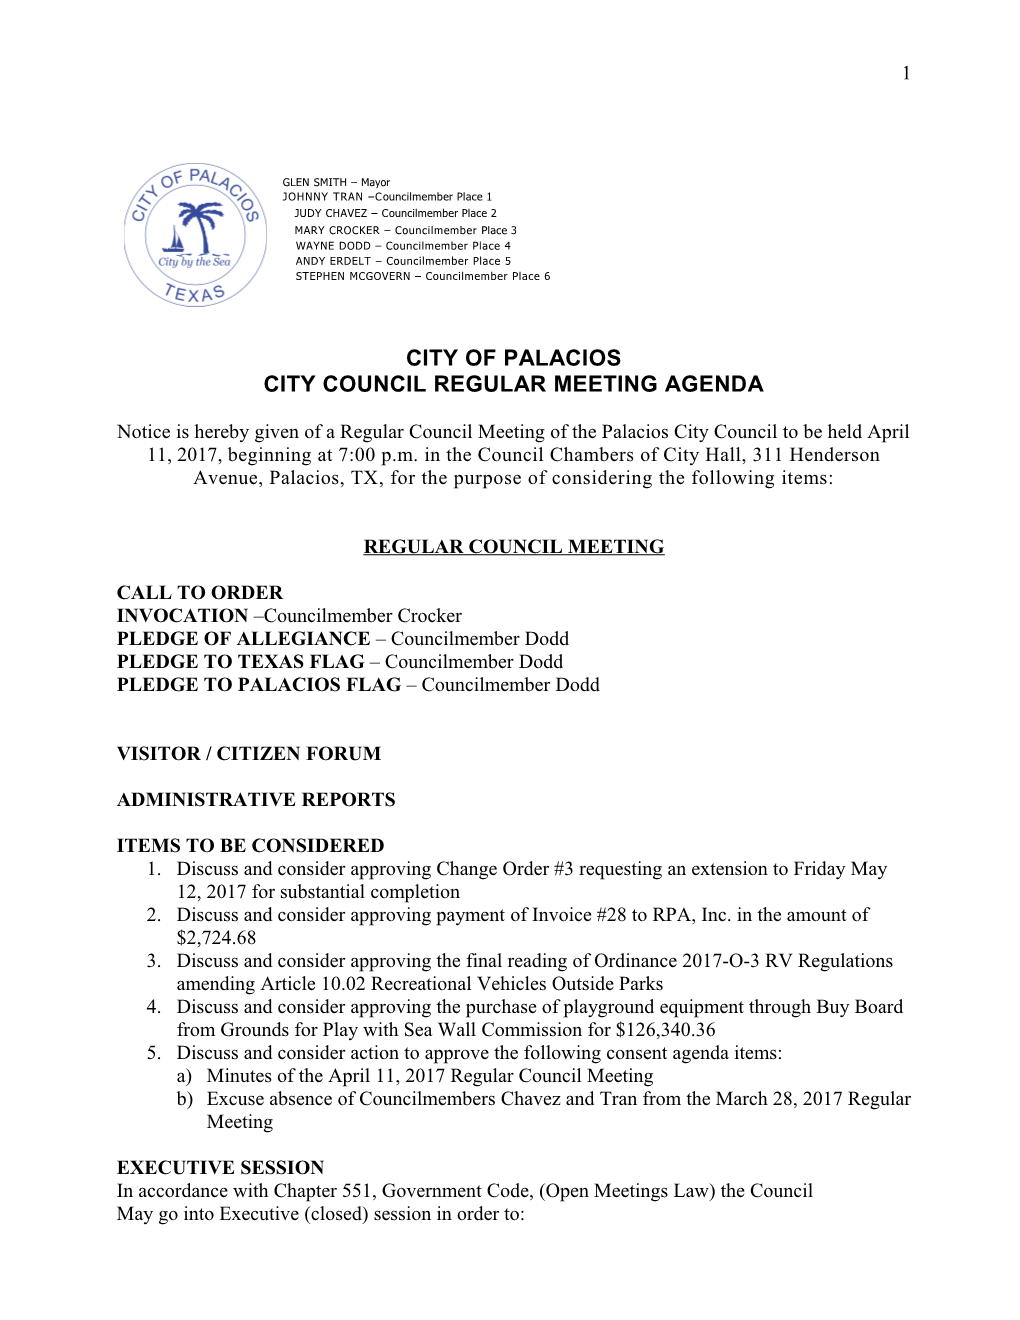 City Council Regularmeeting Agenda